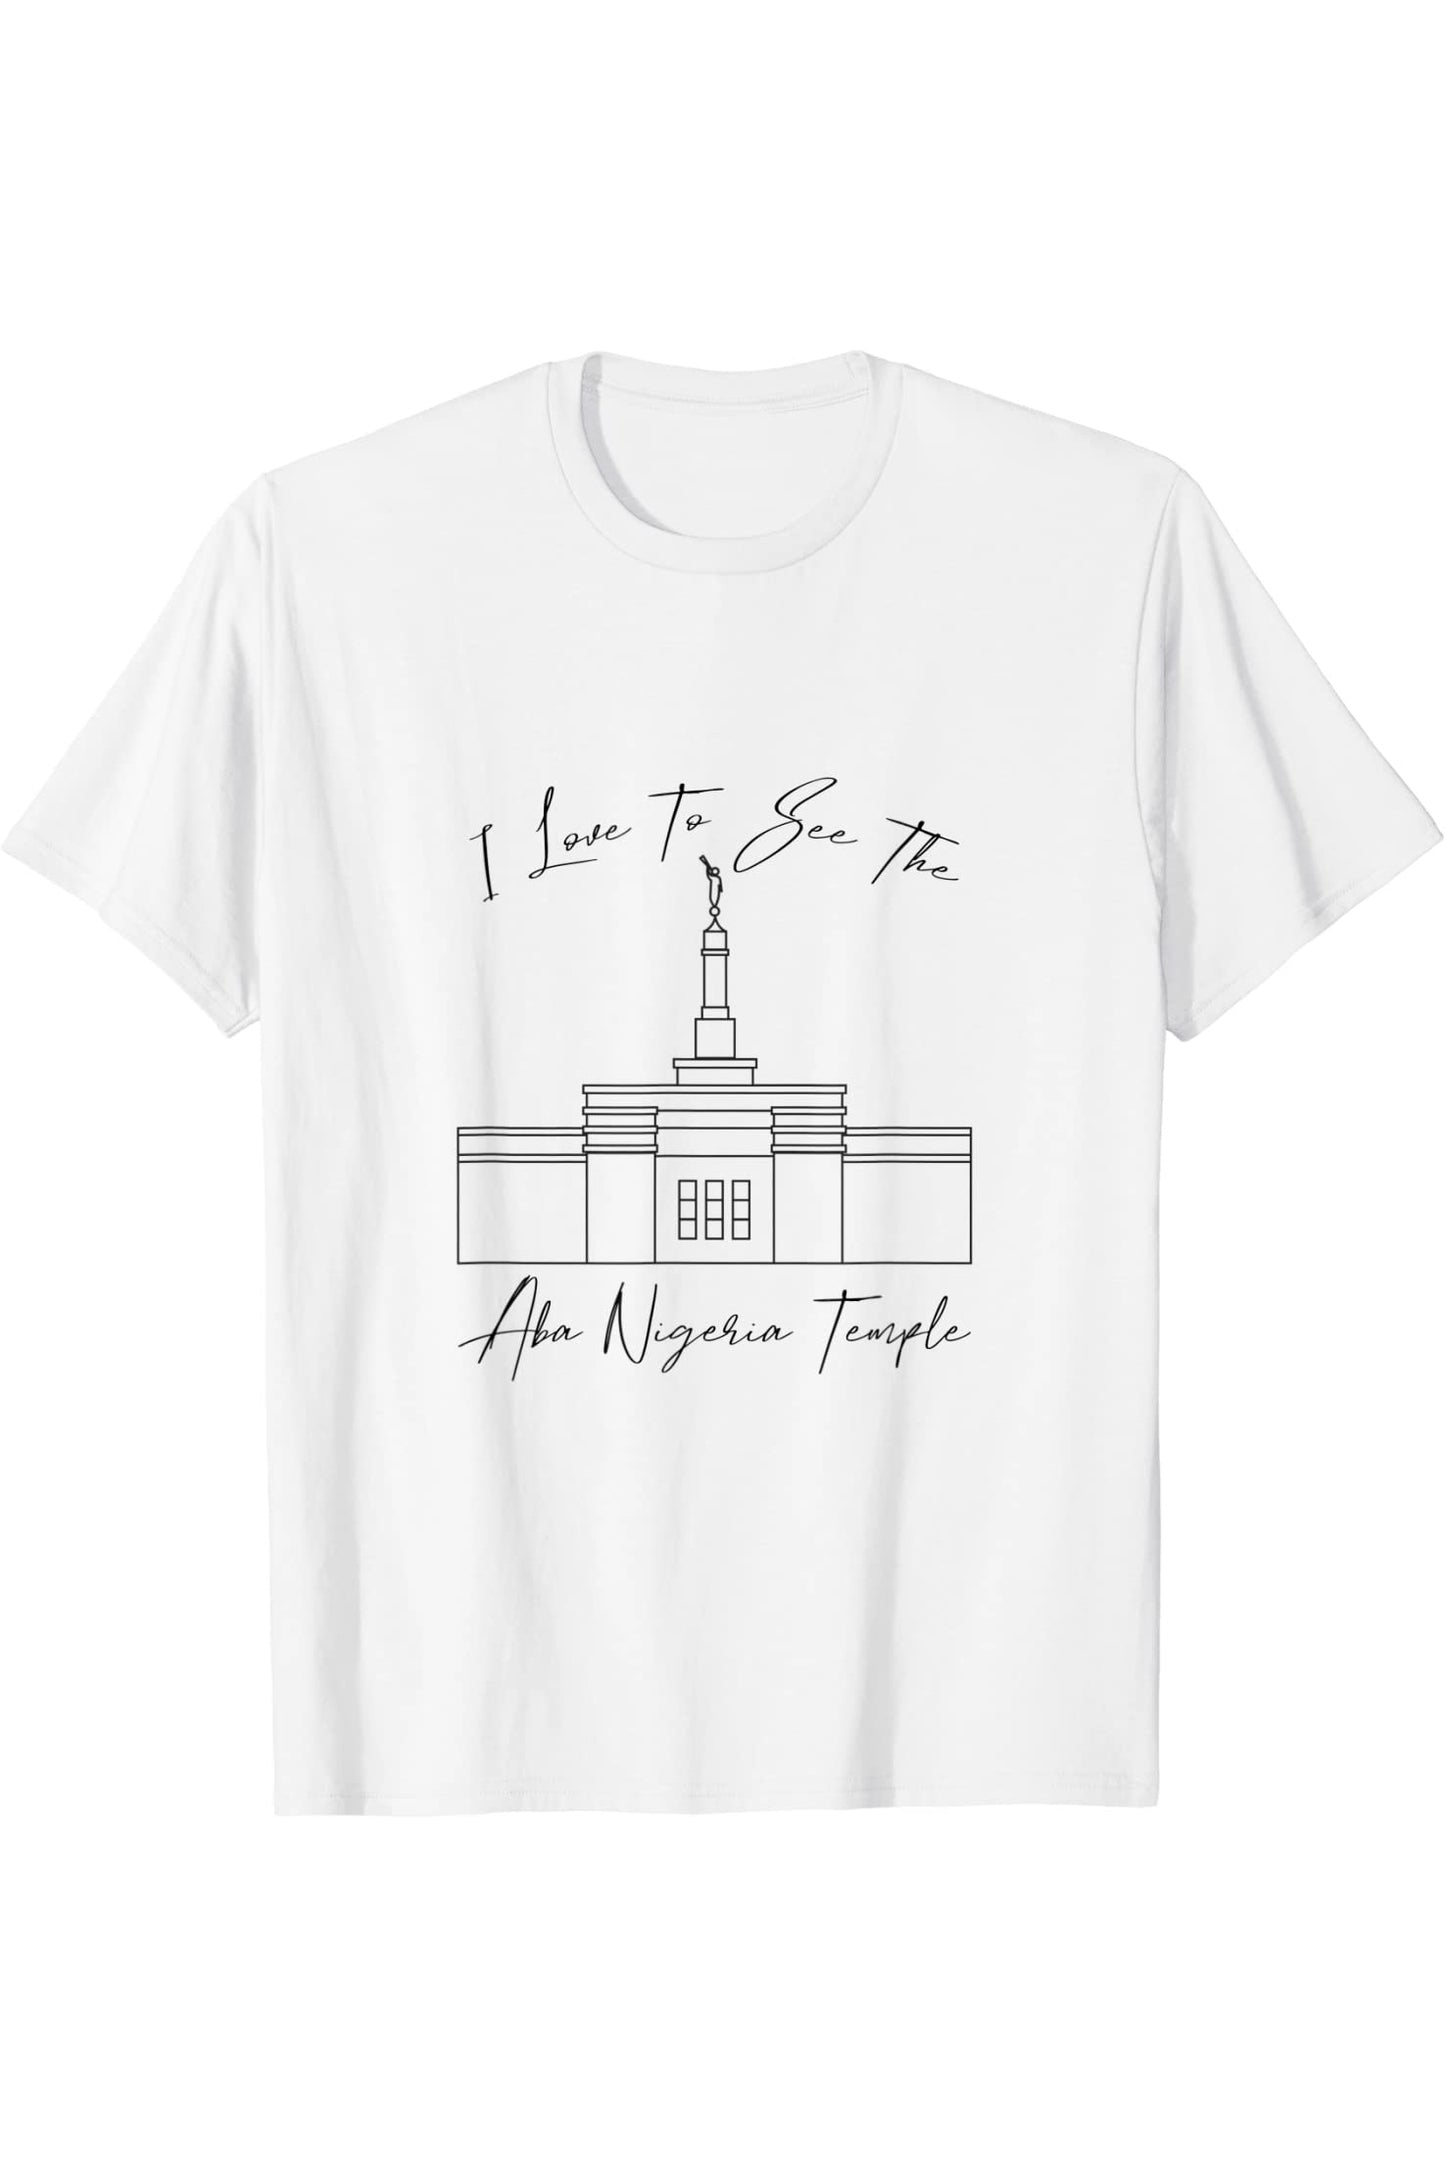 Aba Nigeria Temple T-Shirt - Calligraphy Style (English) US